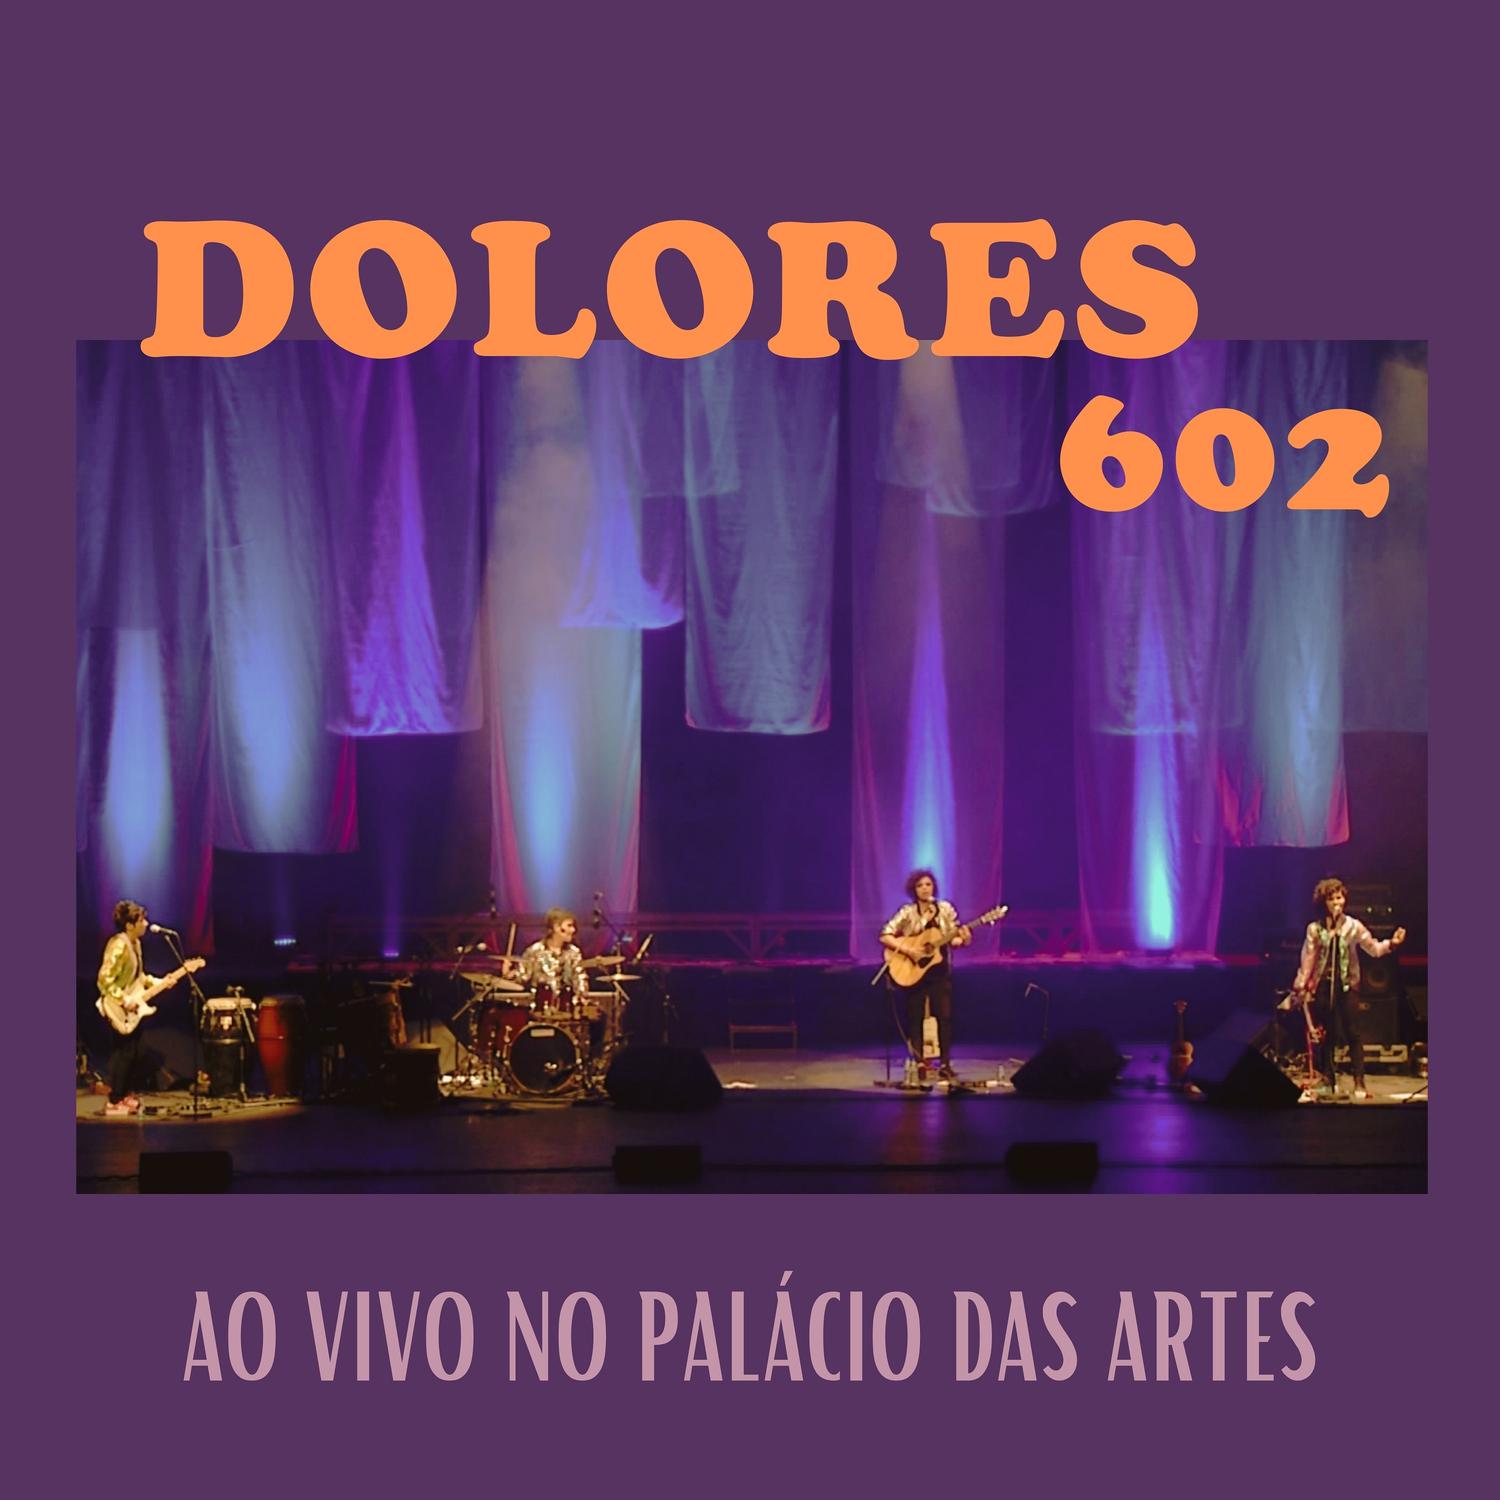 Dolores 602 - Astronauta (Ao Vivo No Palácio das Artes)